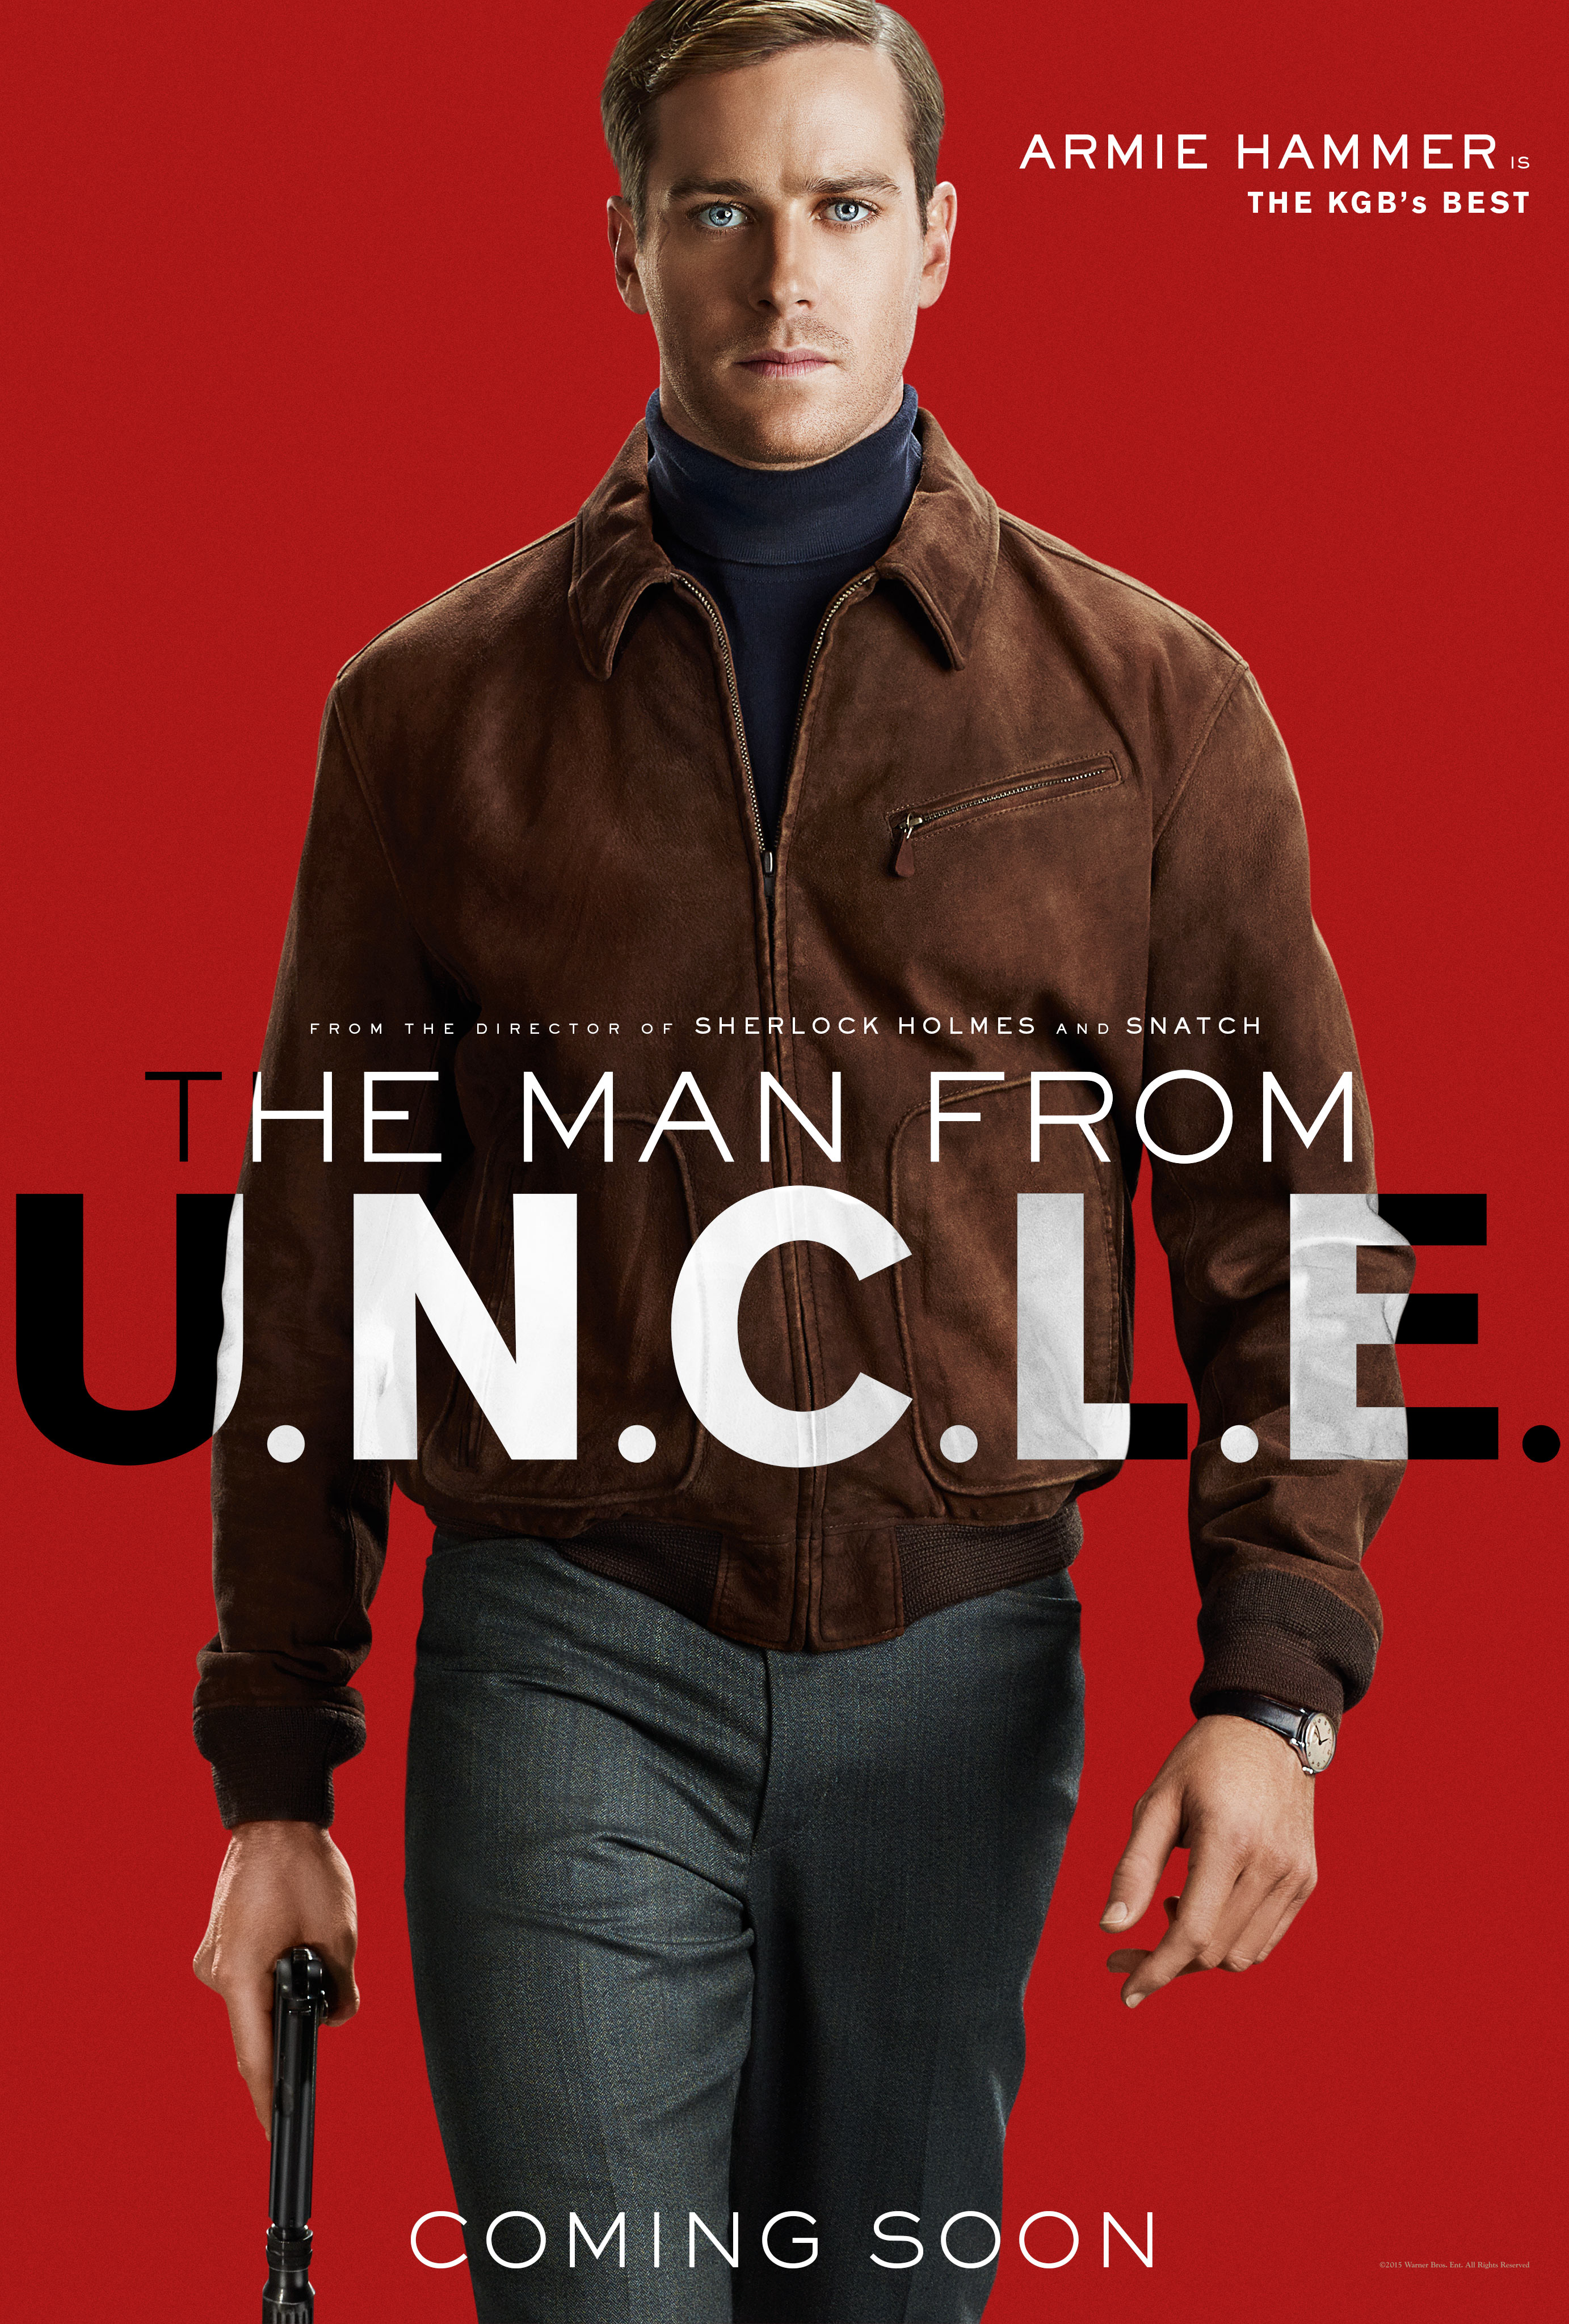 The Man from U.N.C.L.E. Posters | Tom + Lorenzo